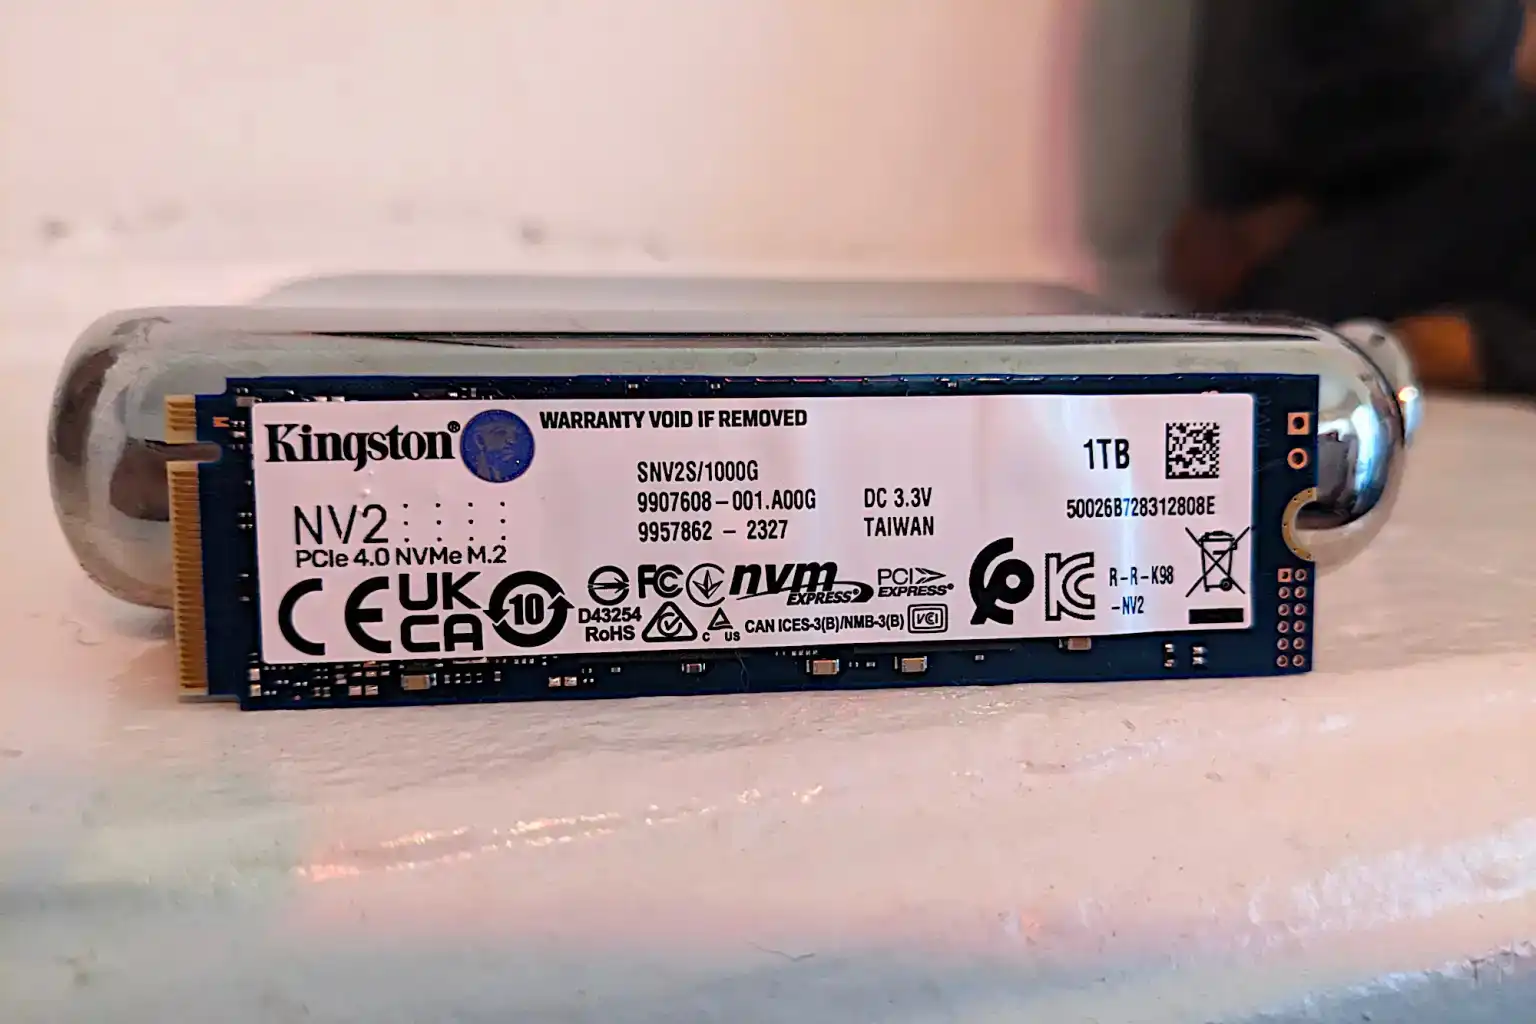 بررسی SSD Kingston NV2: PCIe 4.0